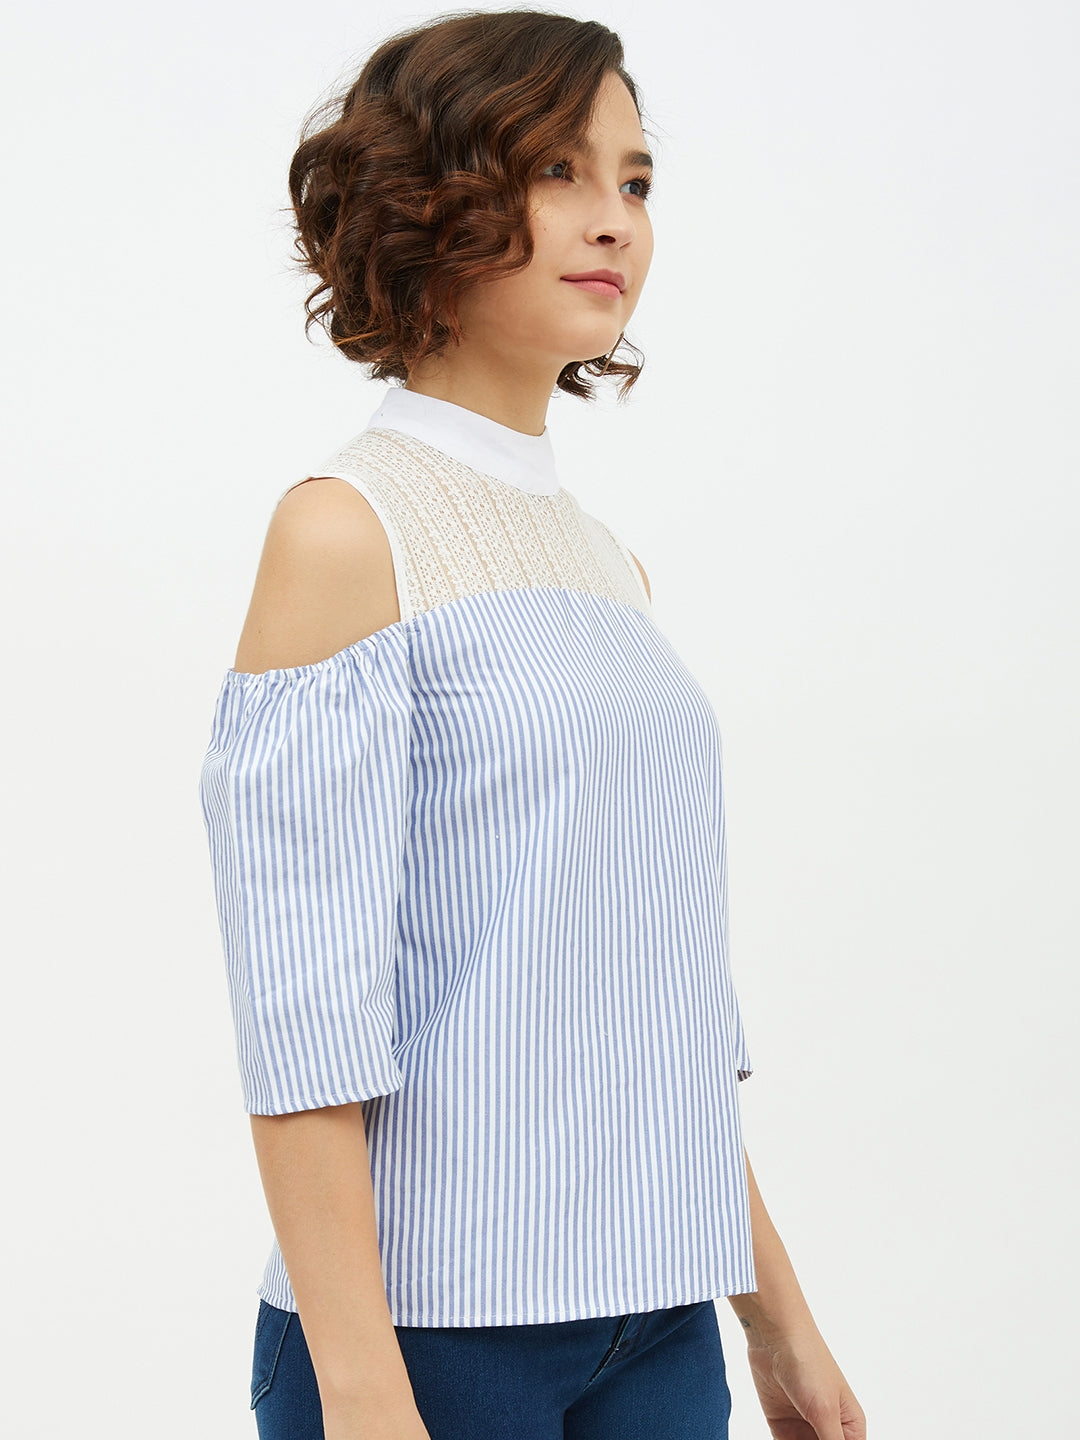 Women's Blue & White Cotton Stripe with Lace detail top - StyleStone